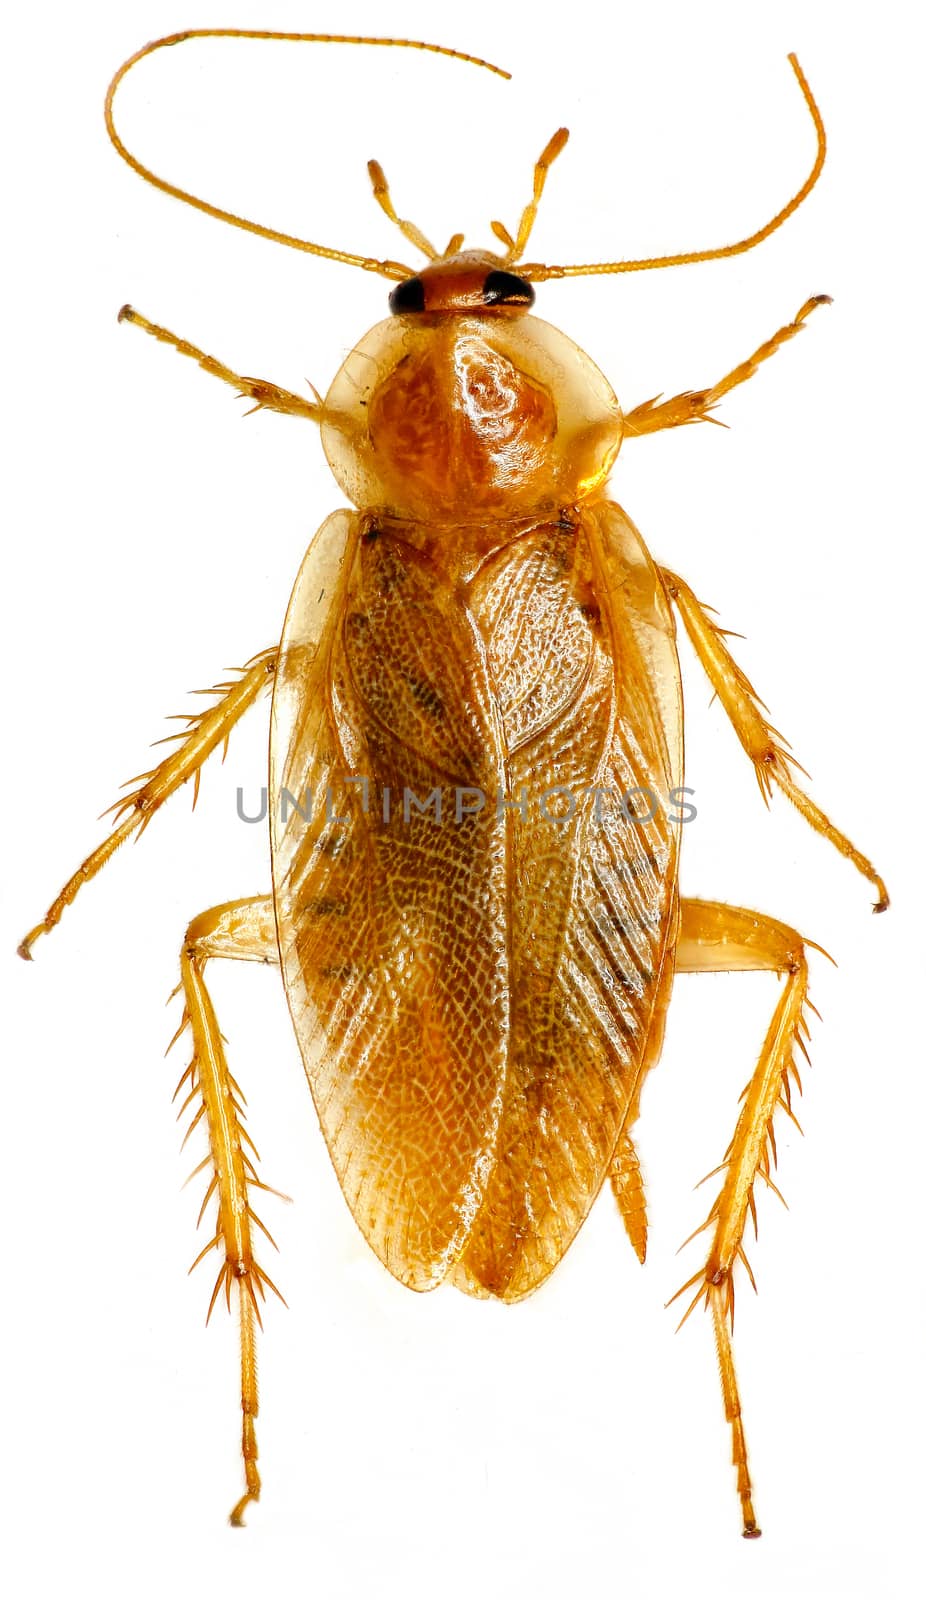 Cockroach on white Background  - Ectobius sp. by gstalker